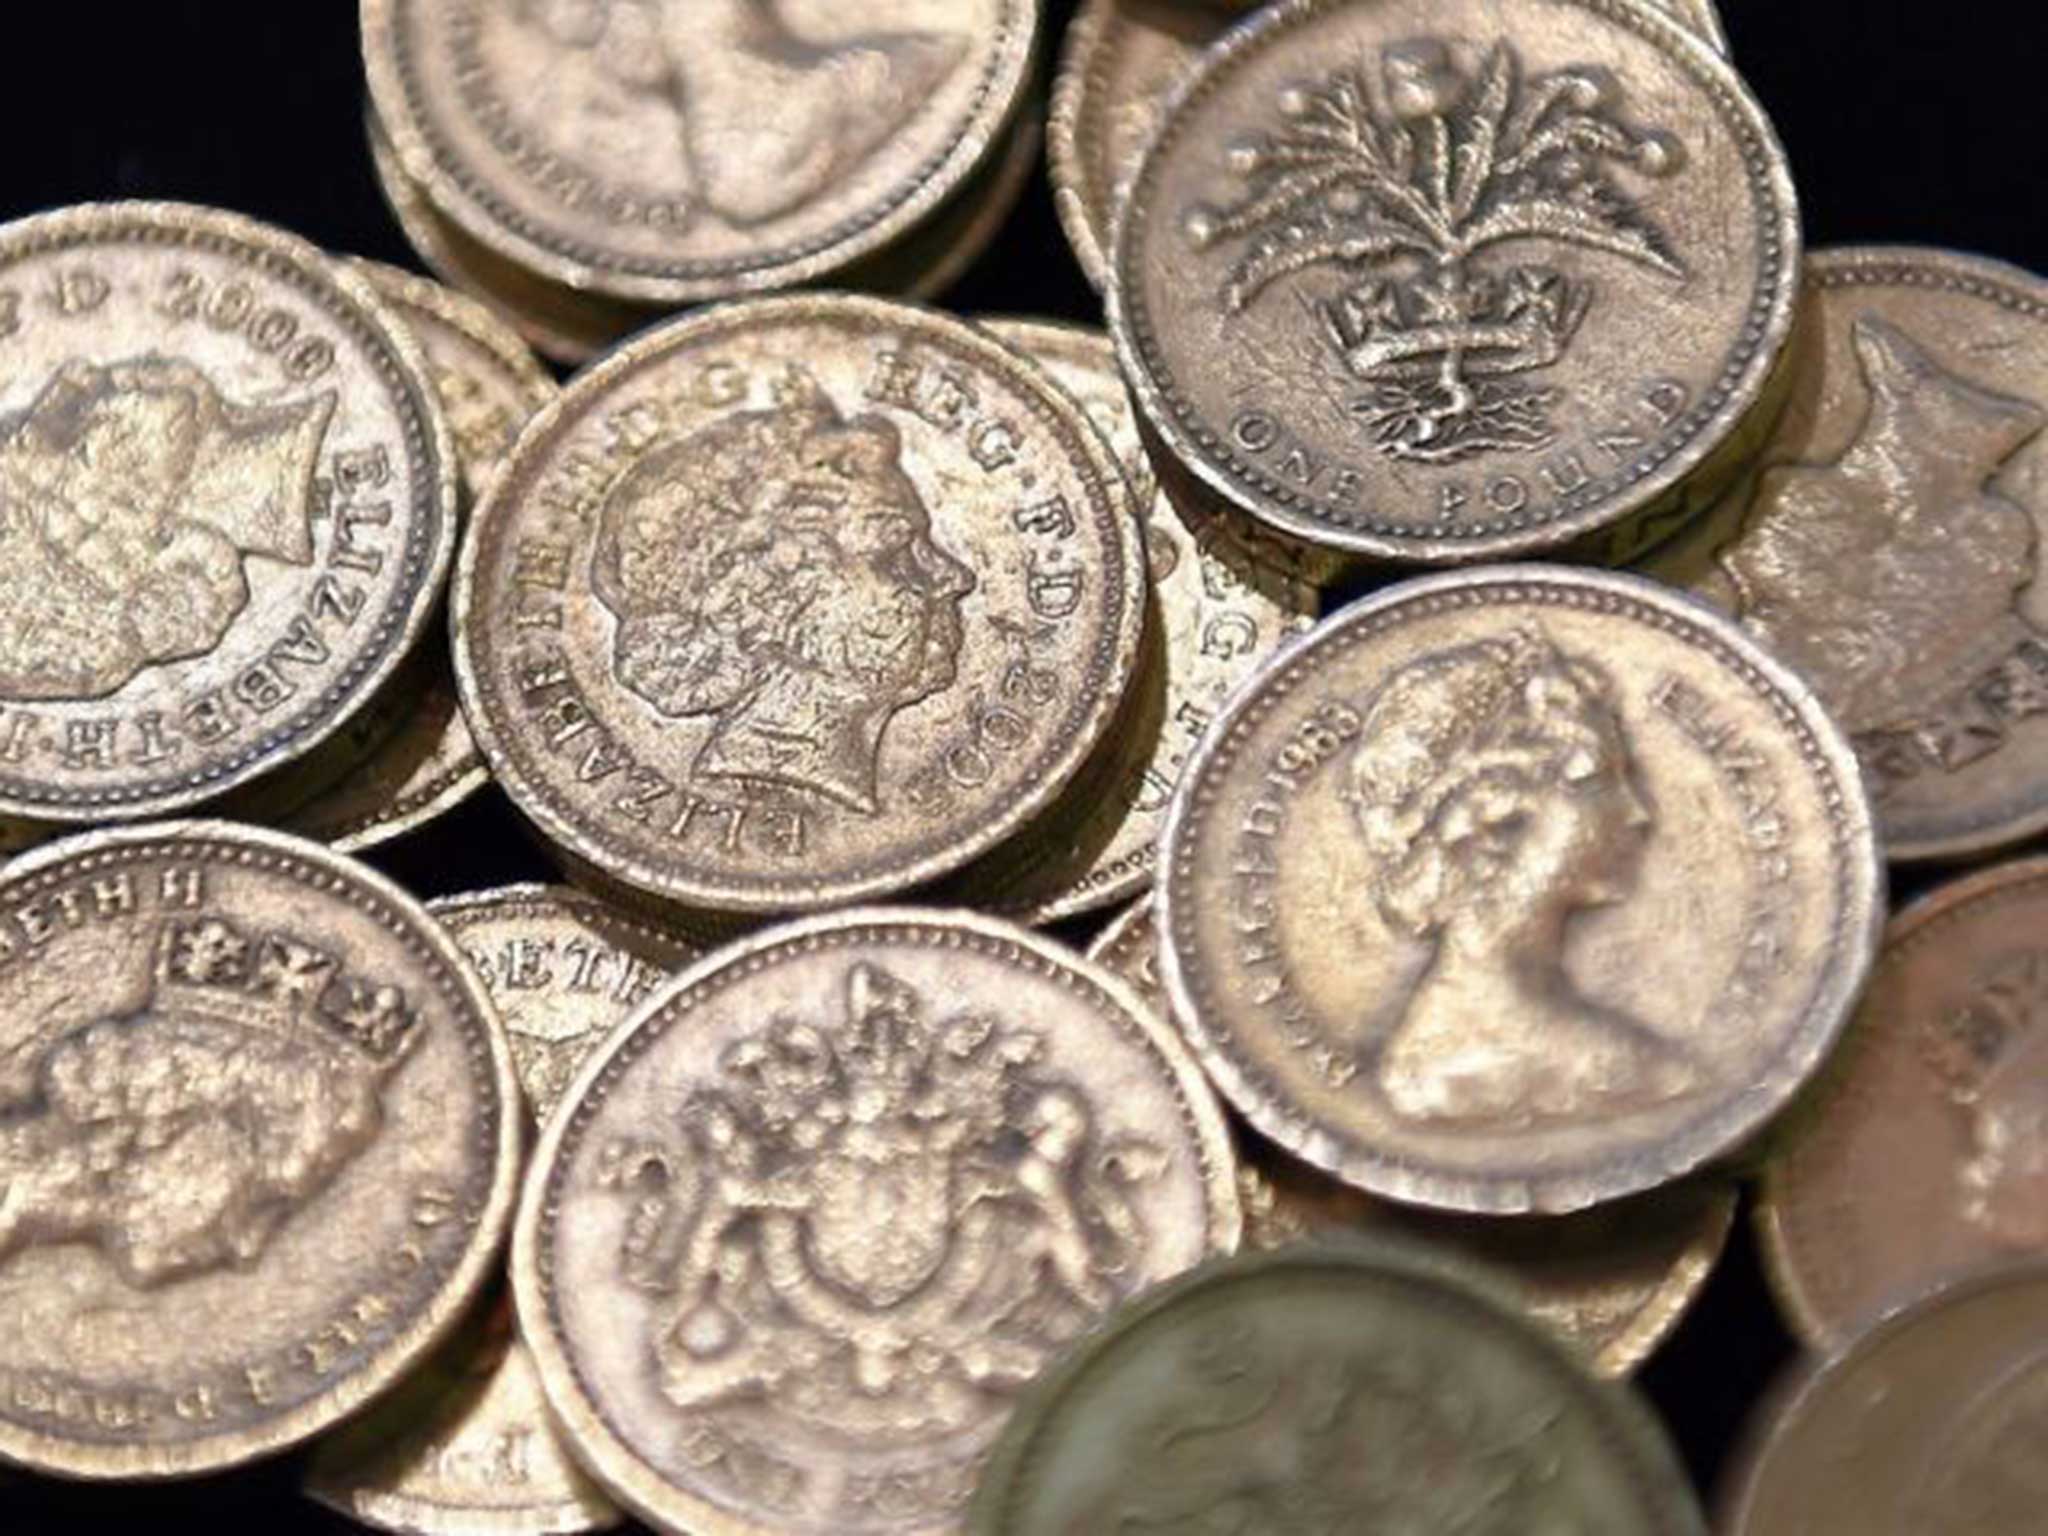 Will Scotland use the pound?